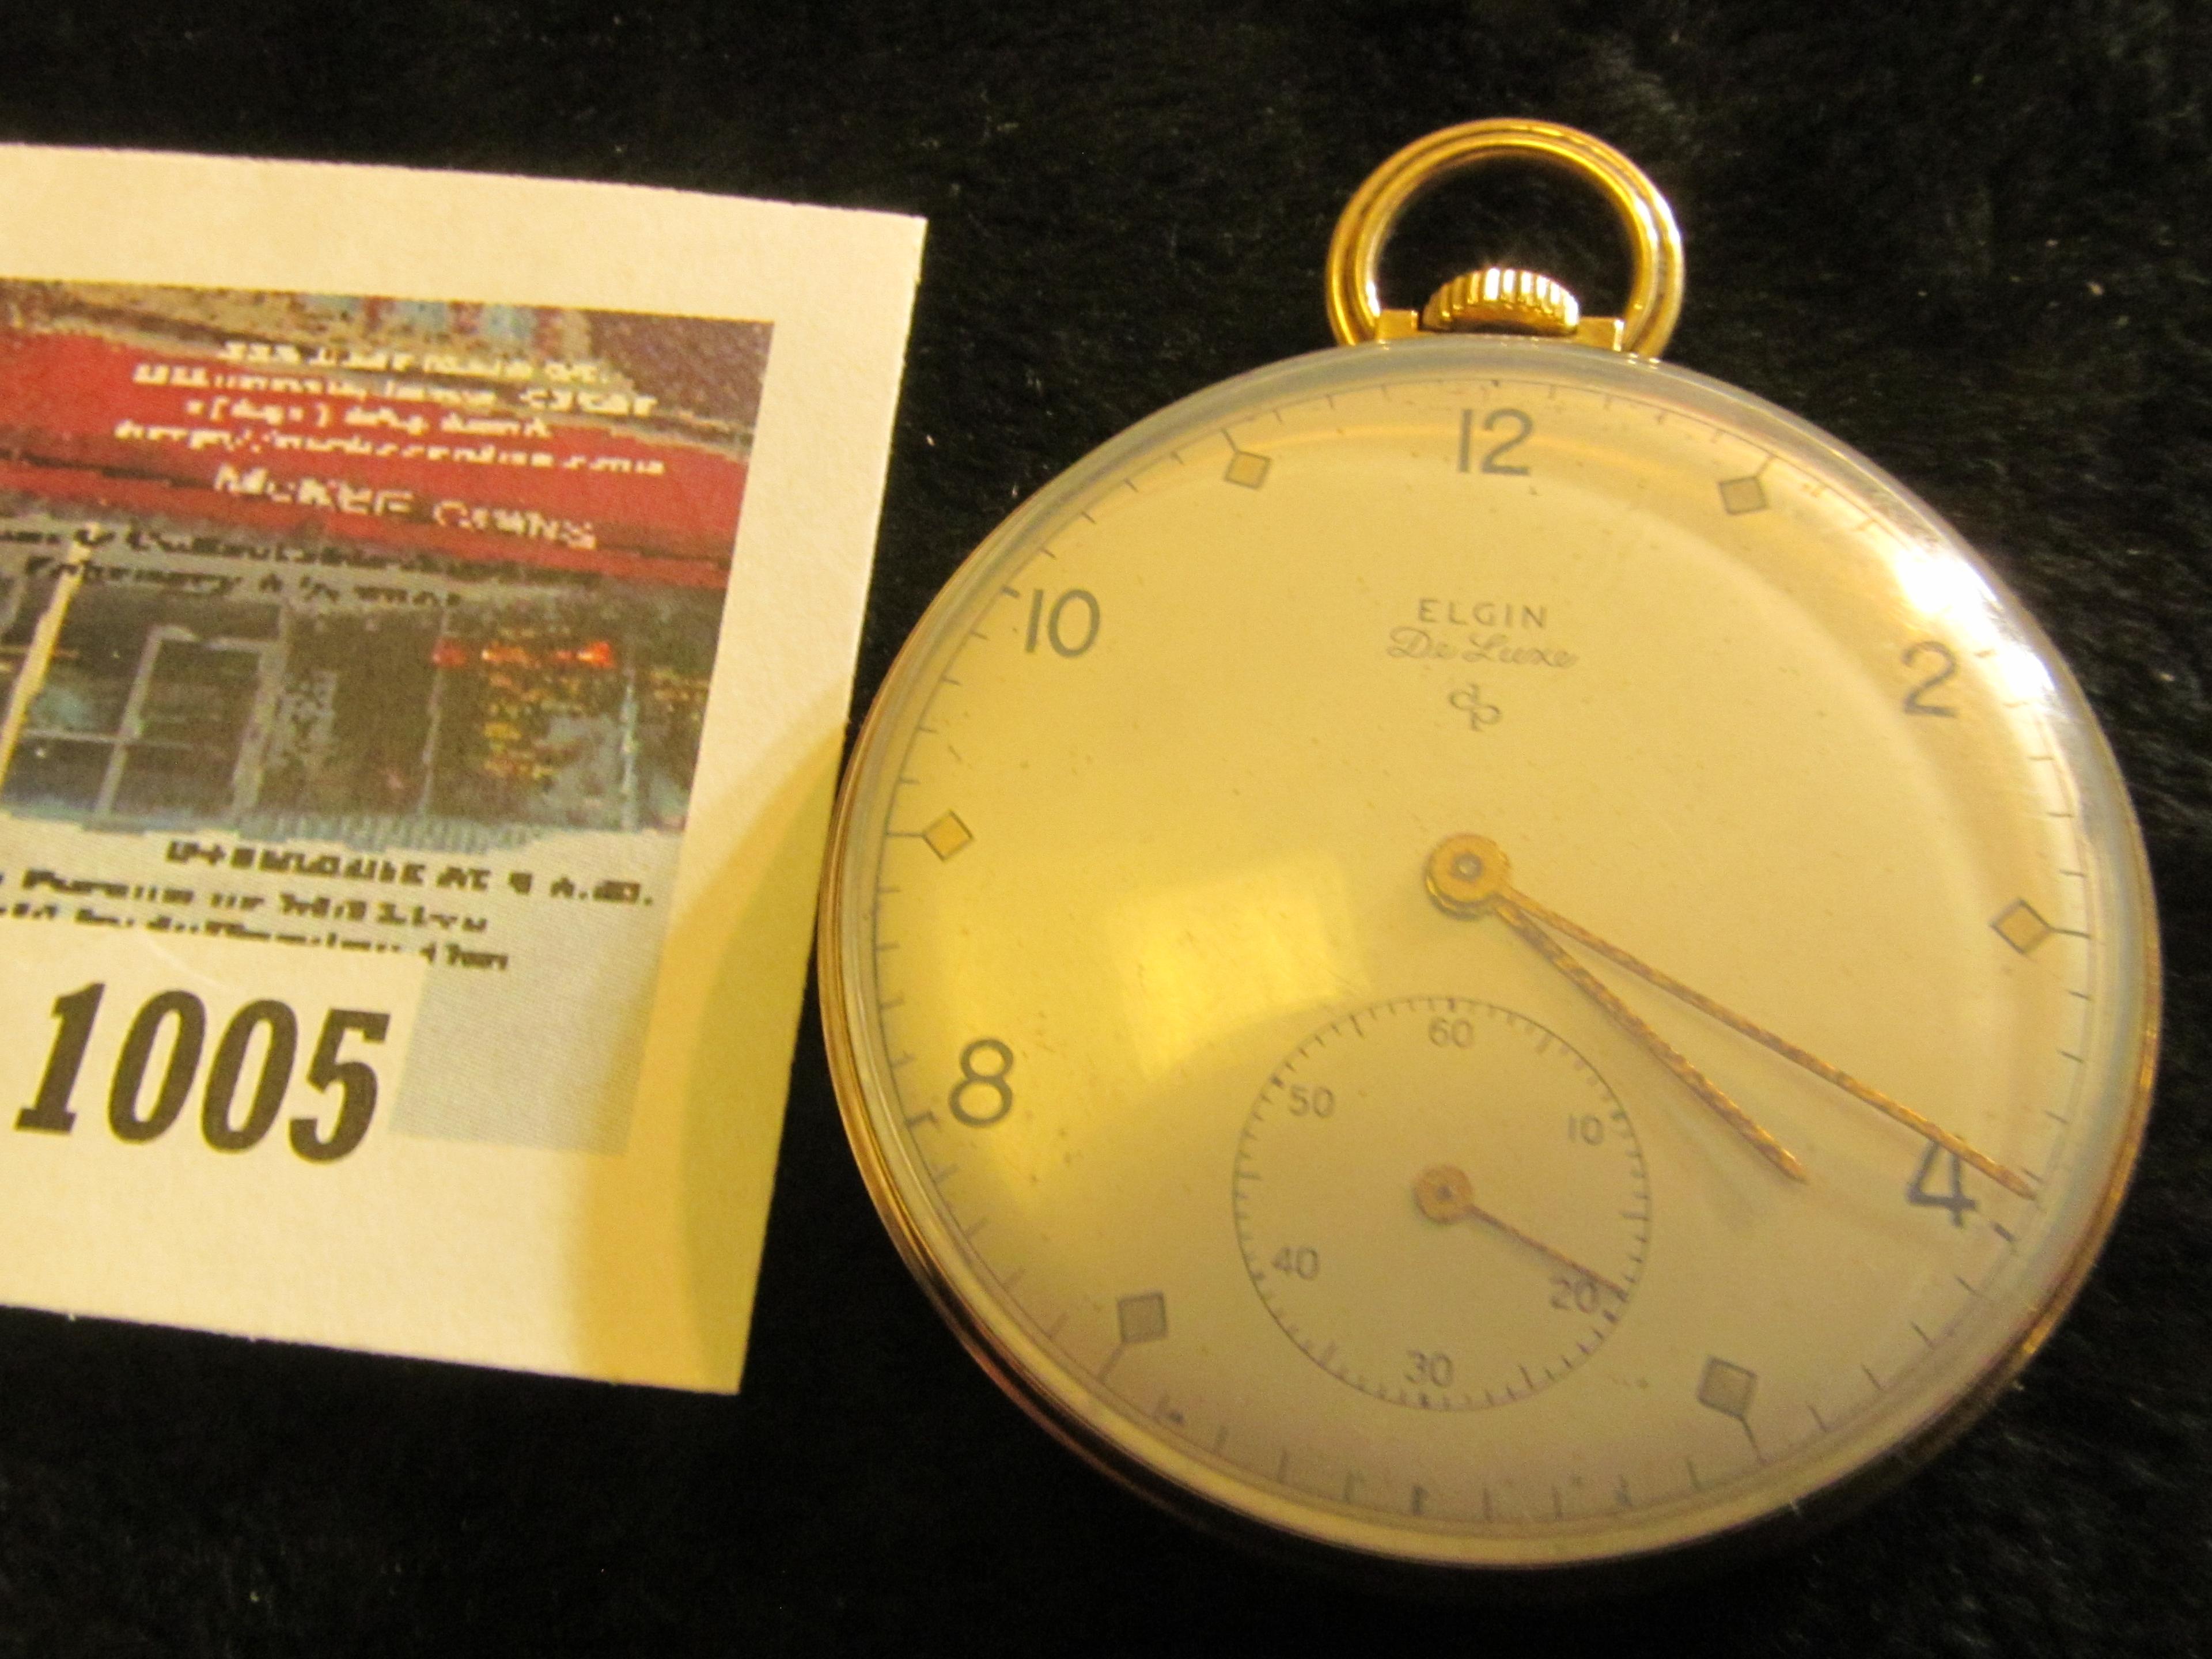 Elgin De Luxe 542 17 jewel pocket watch, size 14s, s/n on works V494510, production date 1949, runs